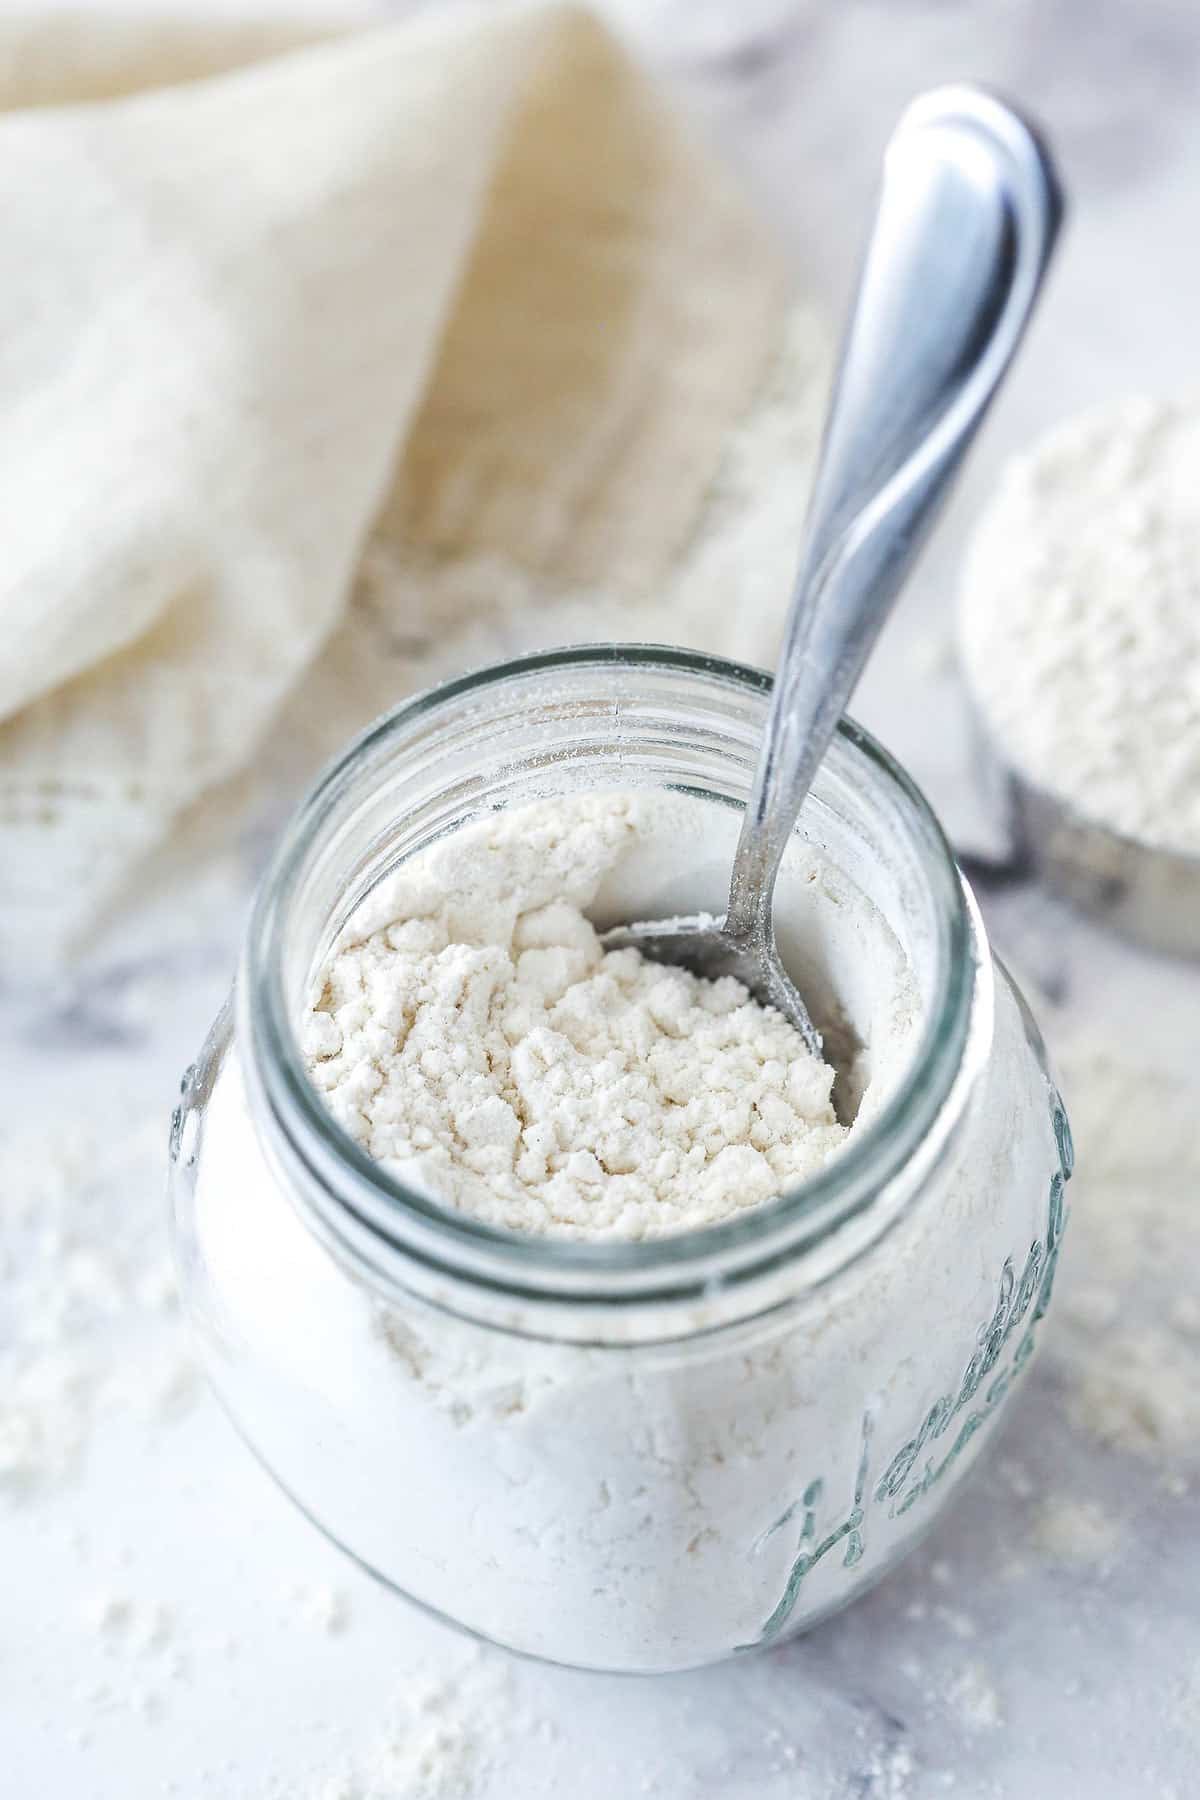 A spoon in a jar or heat treated flour.